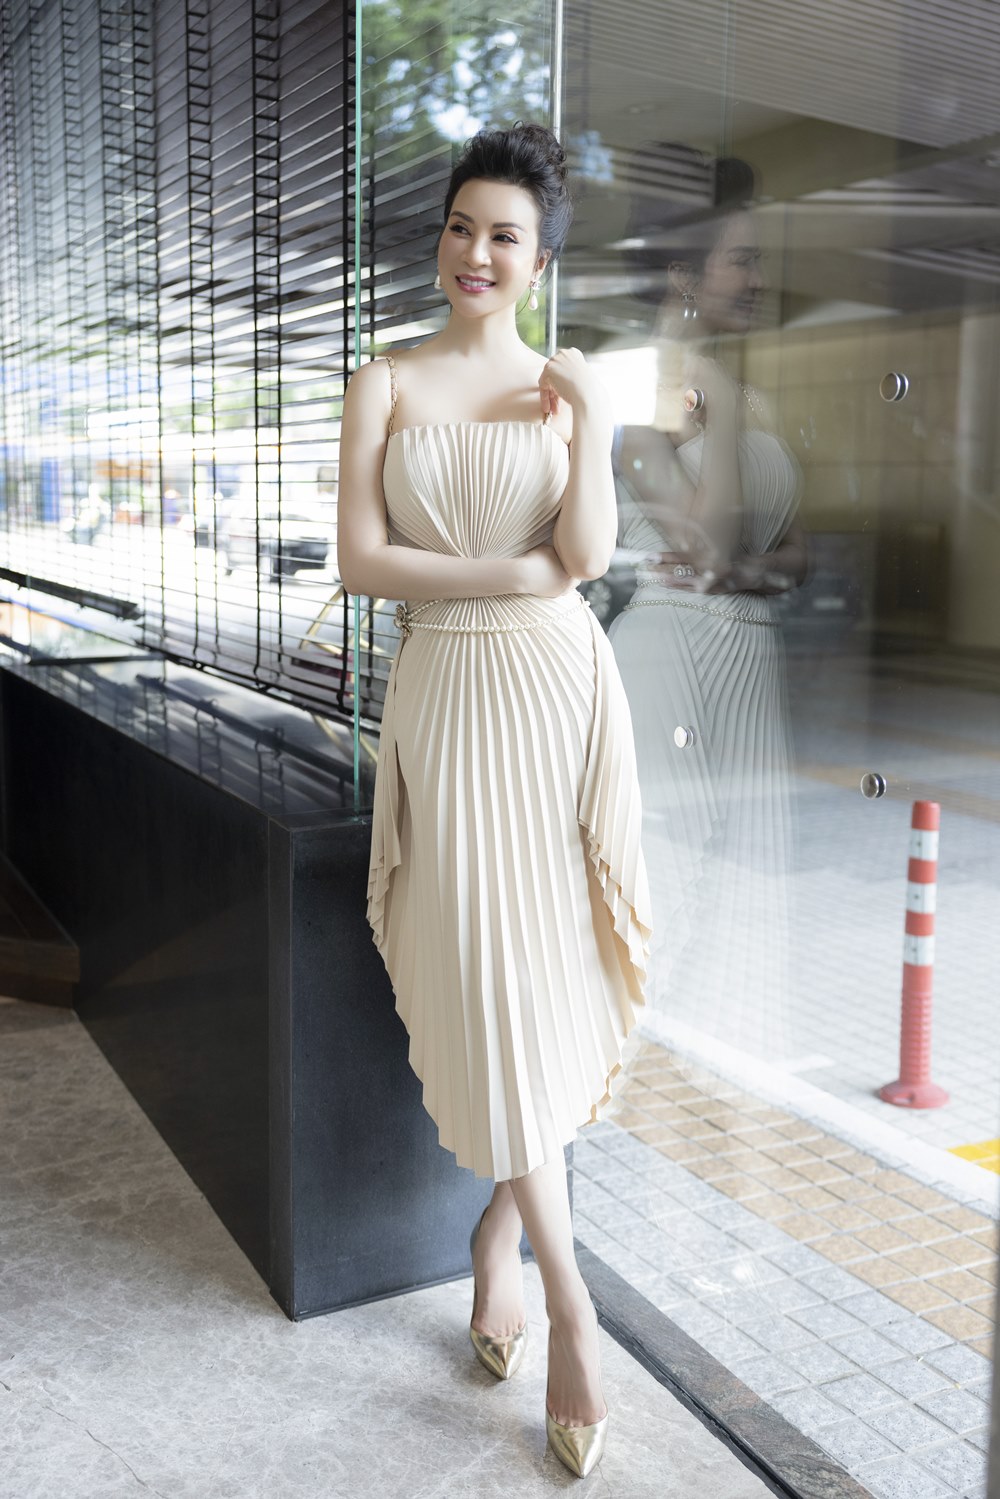 Thanh Mai wears a beautiful white dress in a fashion talk - 6